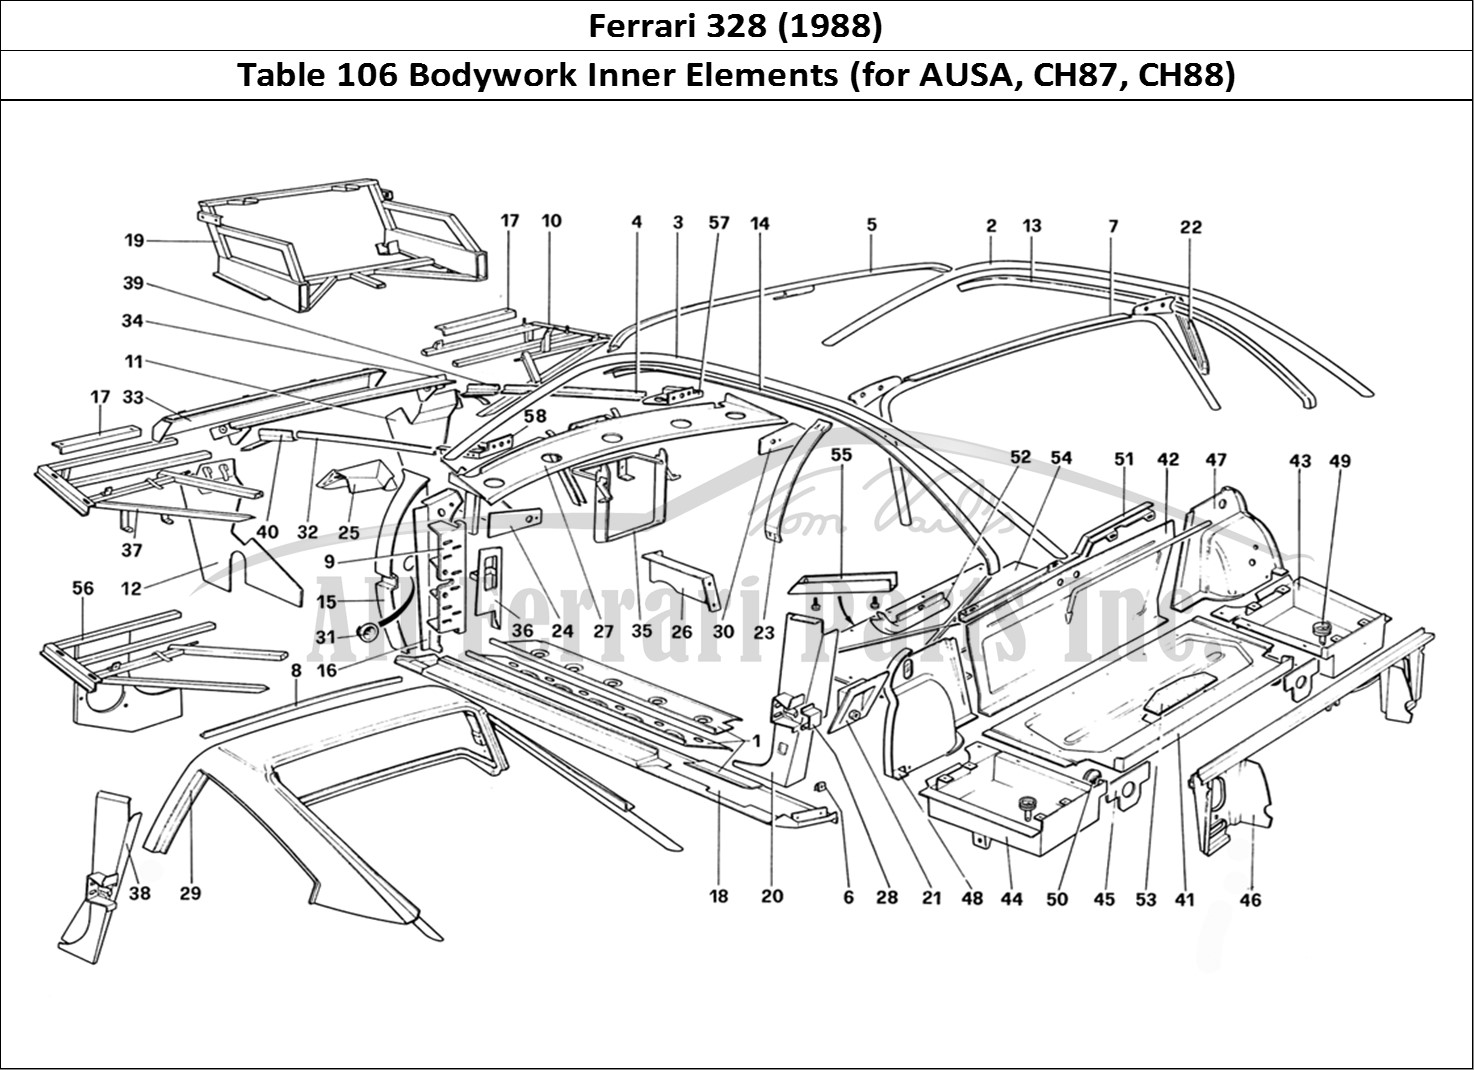 Ferrari Parts Ferrari 328 (1988) Page 106 Body Shell - Inner Elemen